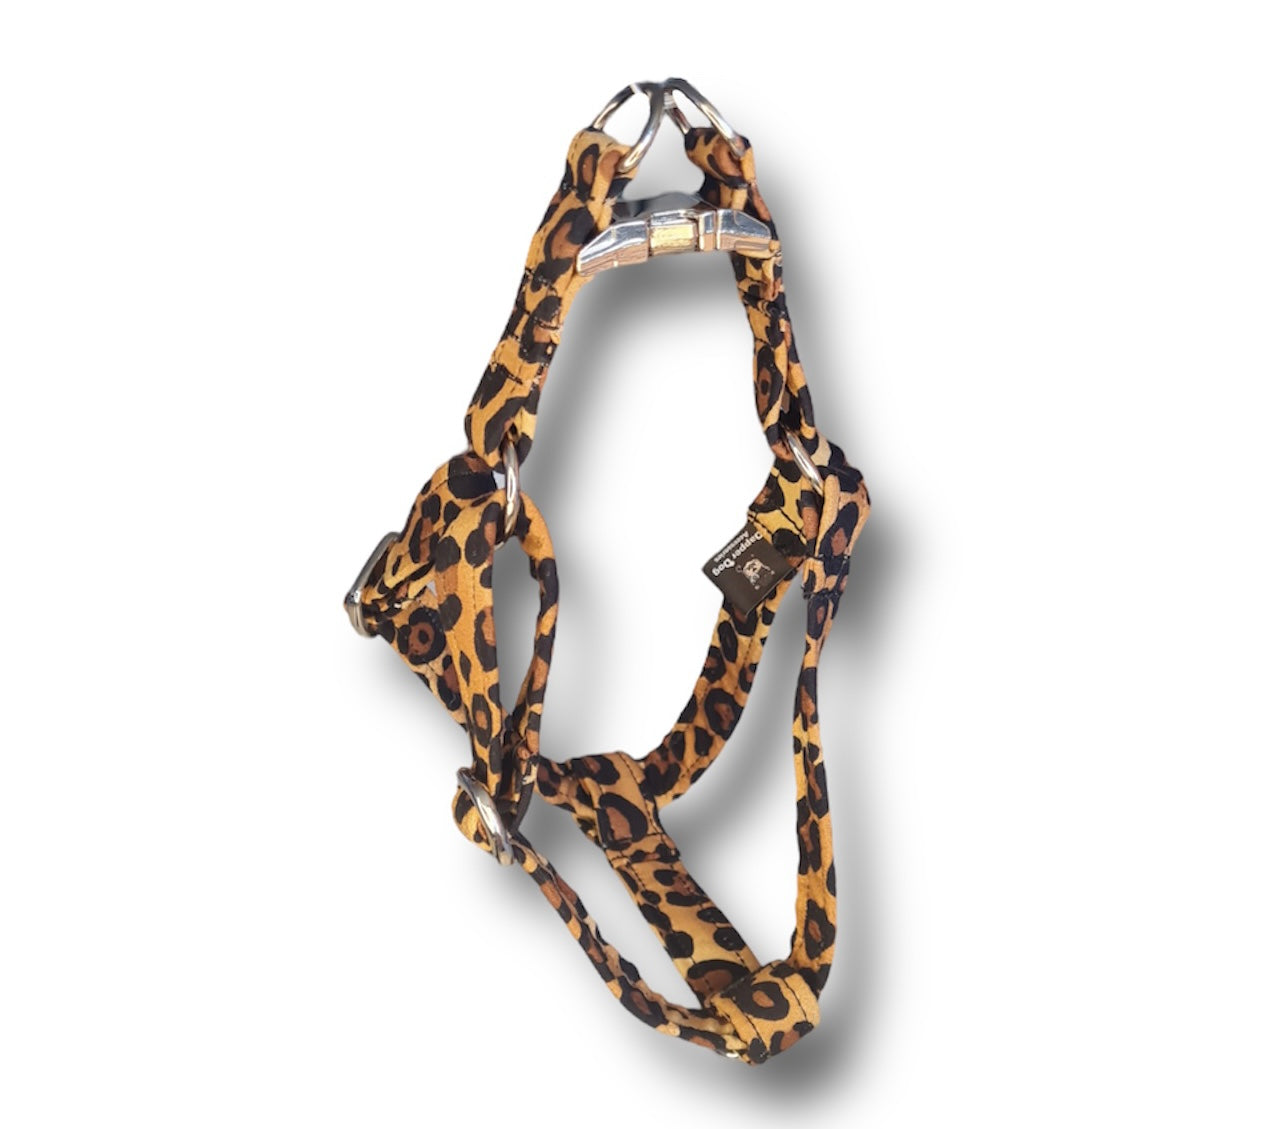 Adjustable step in dog harness - Leopard print